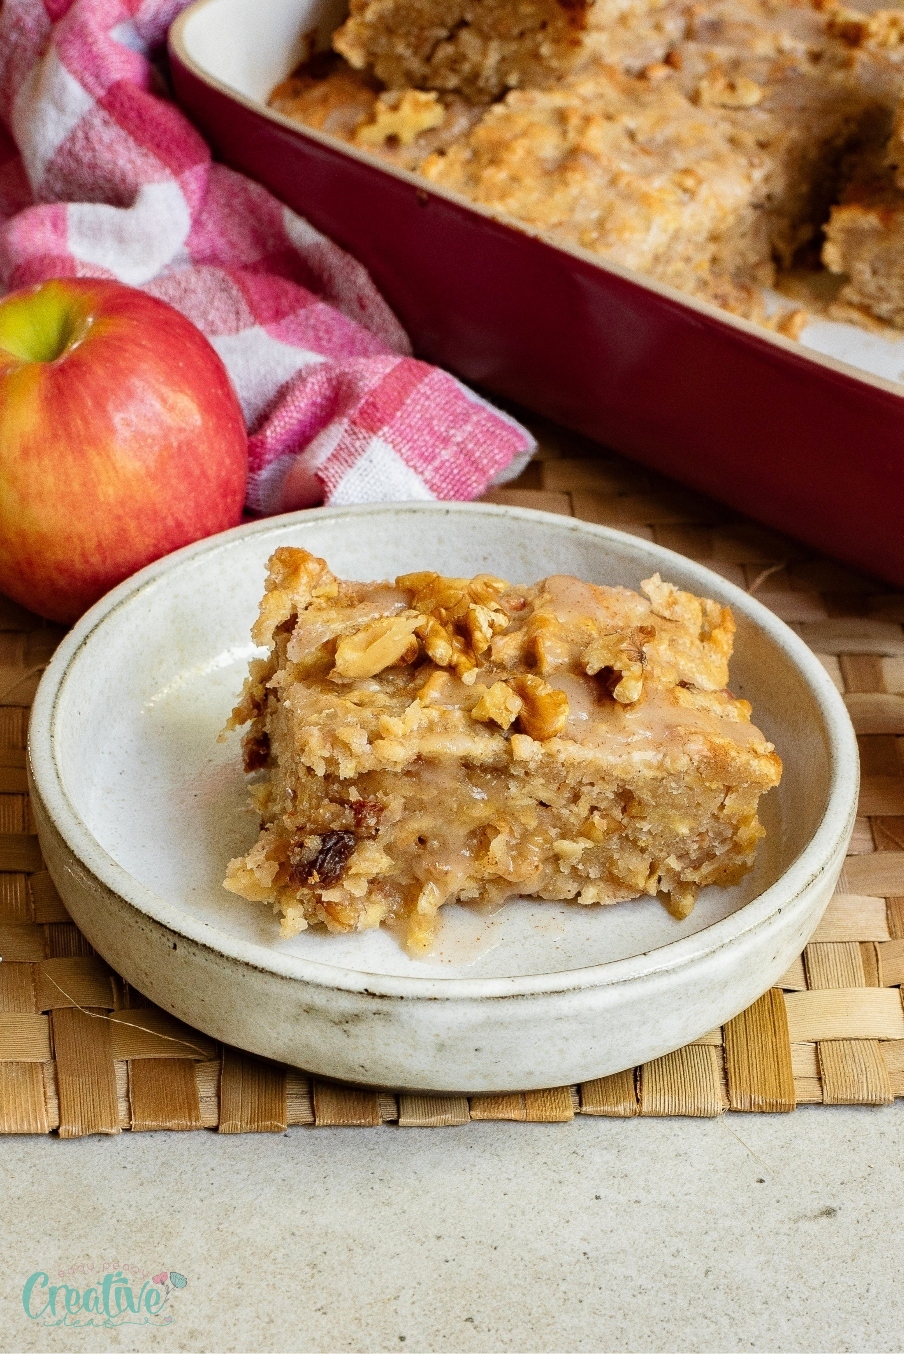 Tasty apple & cinnamon cake recipe featuring a moist cake with apple chunks and cinnamon flavor.